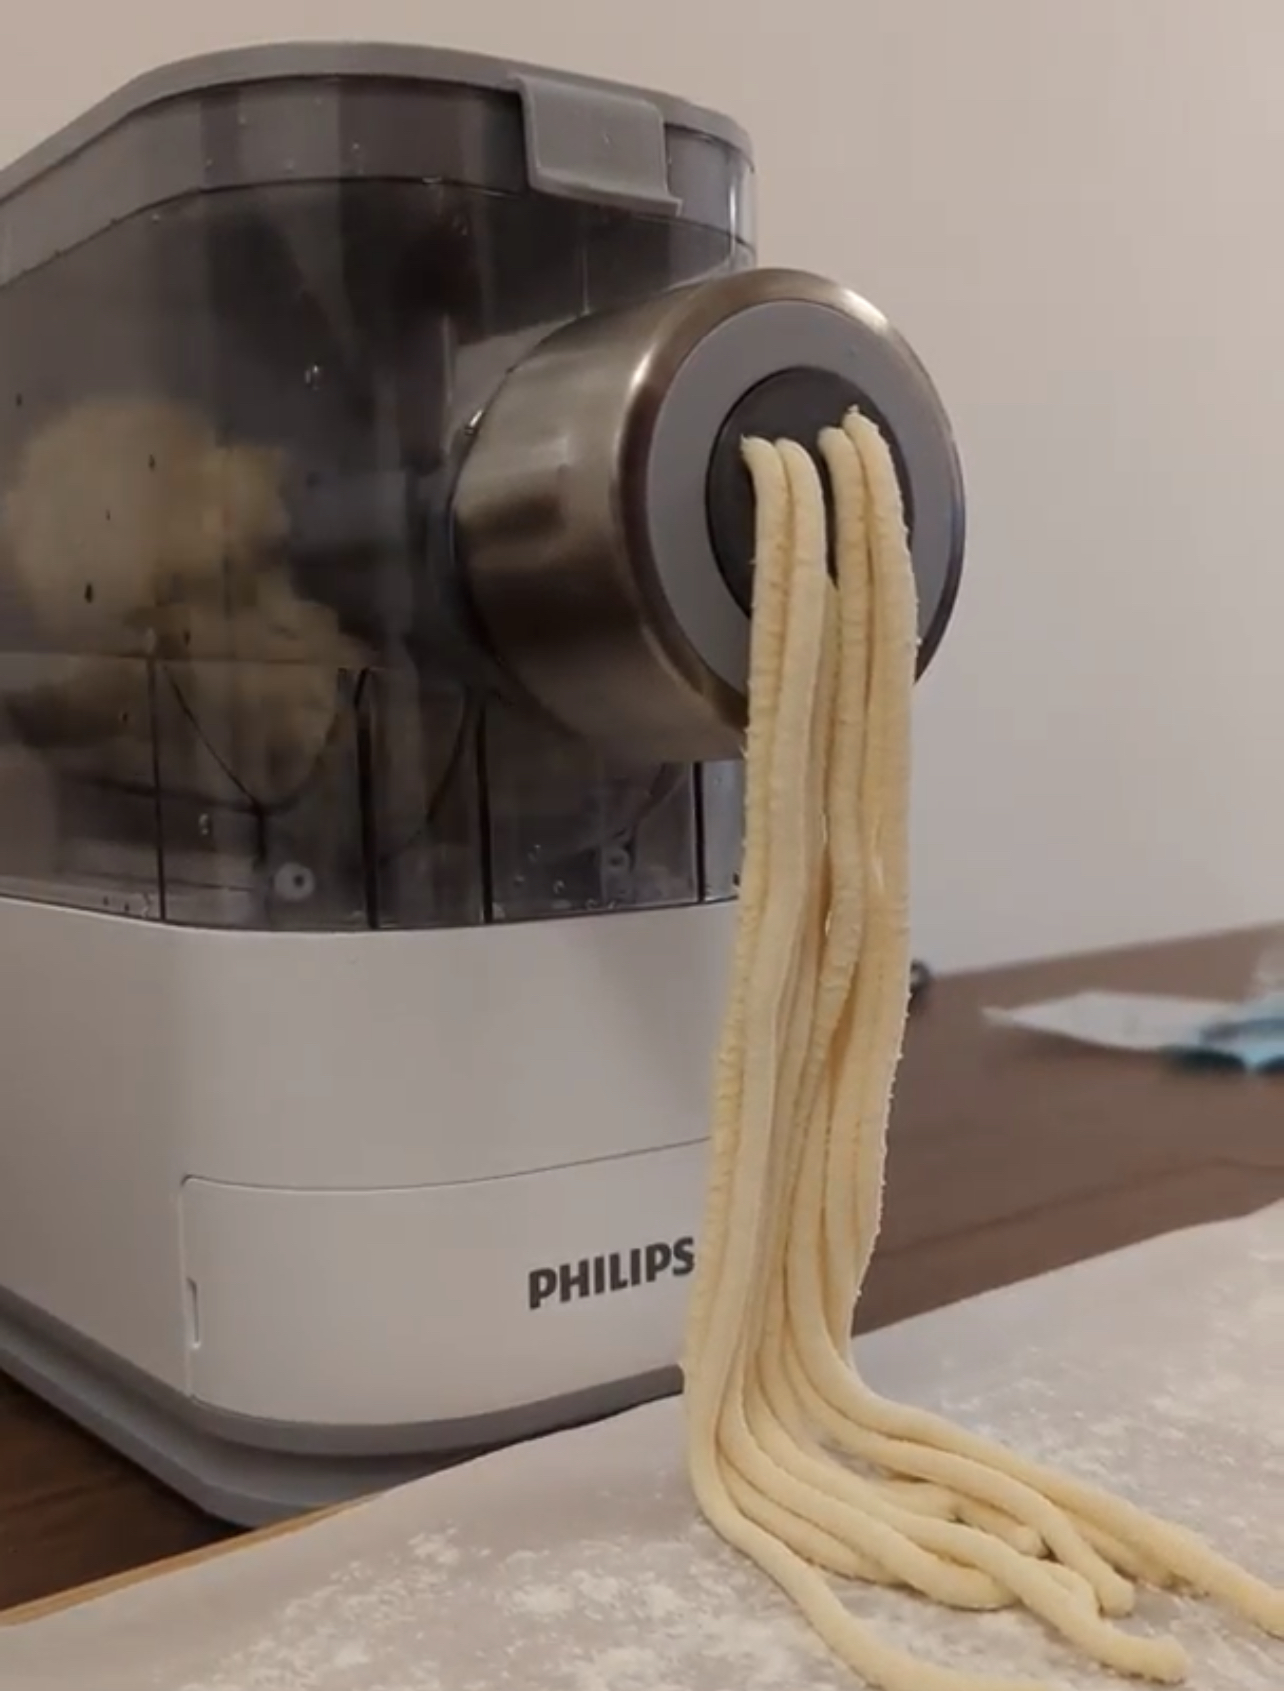 Udon - Bigoli shaping disk for Philips Pasta Maker